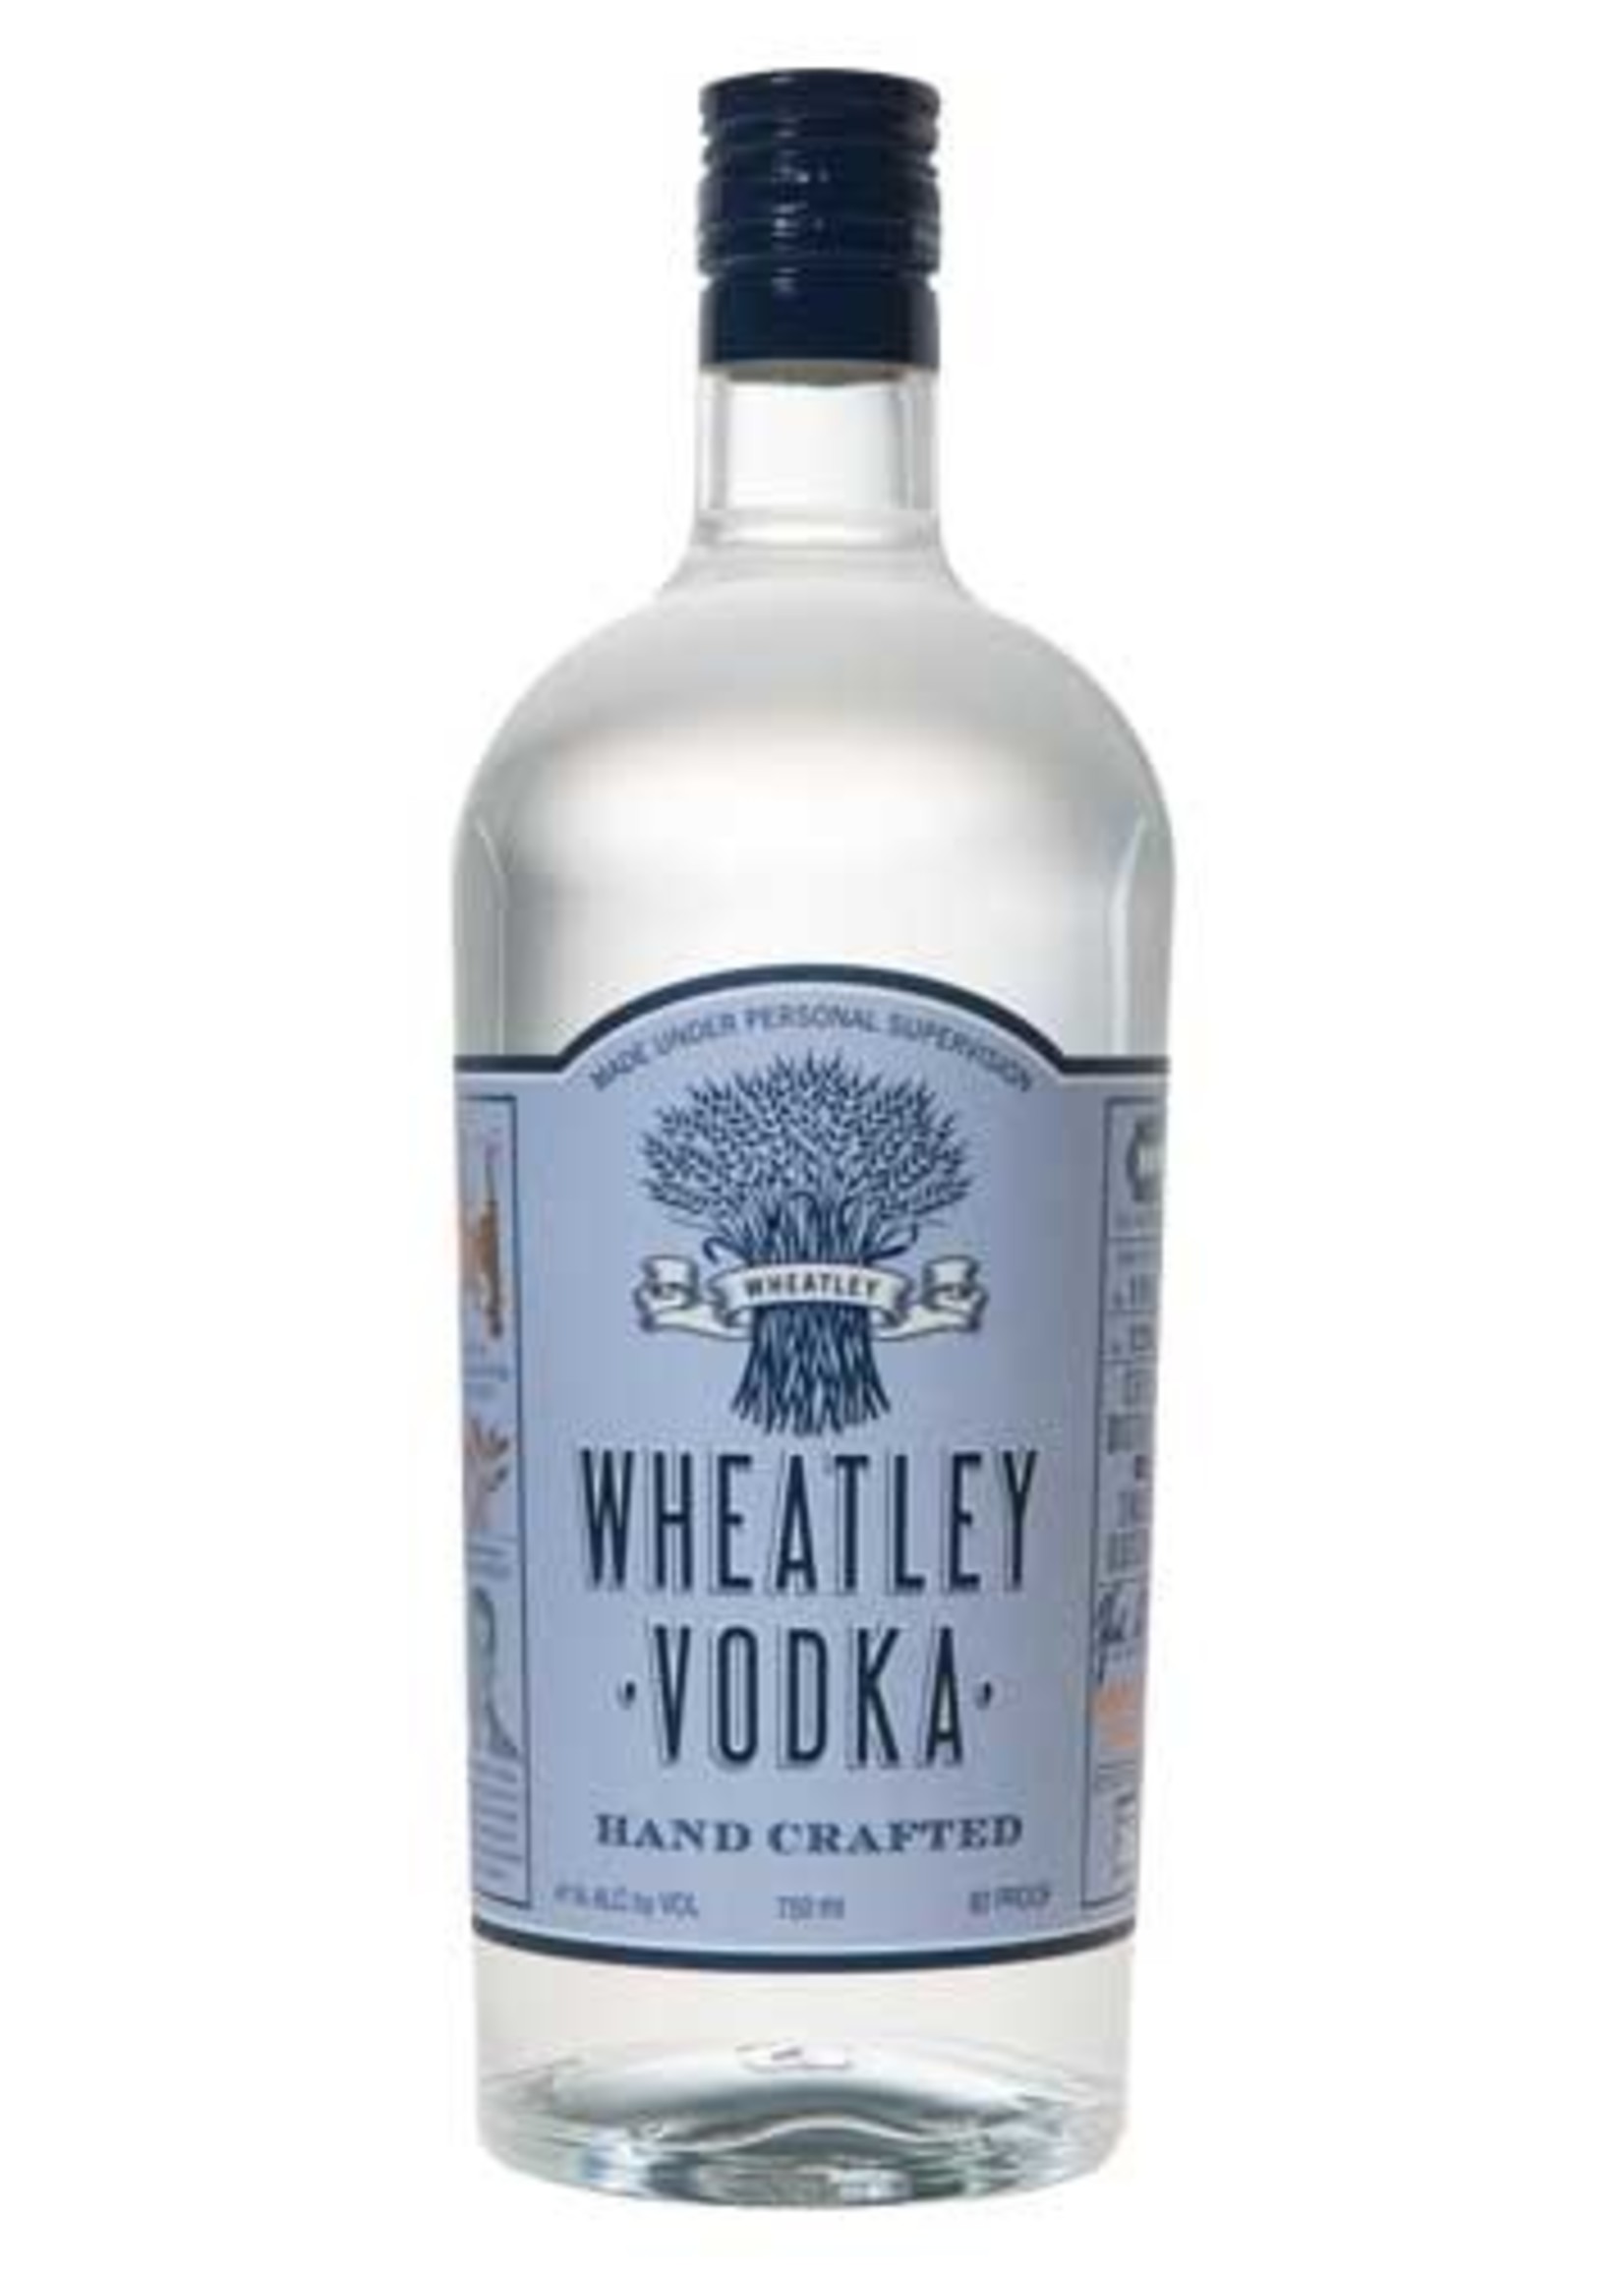 Buffalo Trace Wheatley Vodka / Craft Distilled Vodka / 750mL